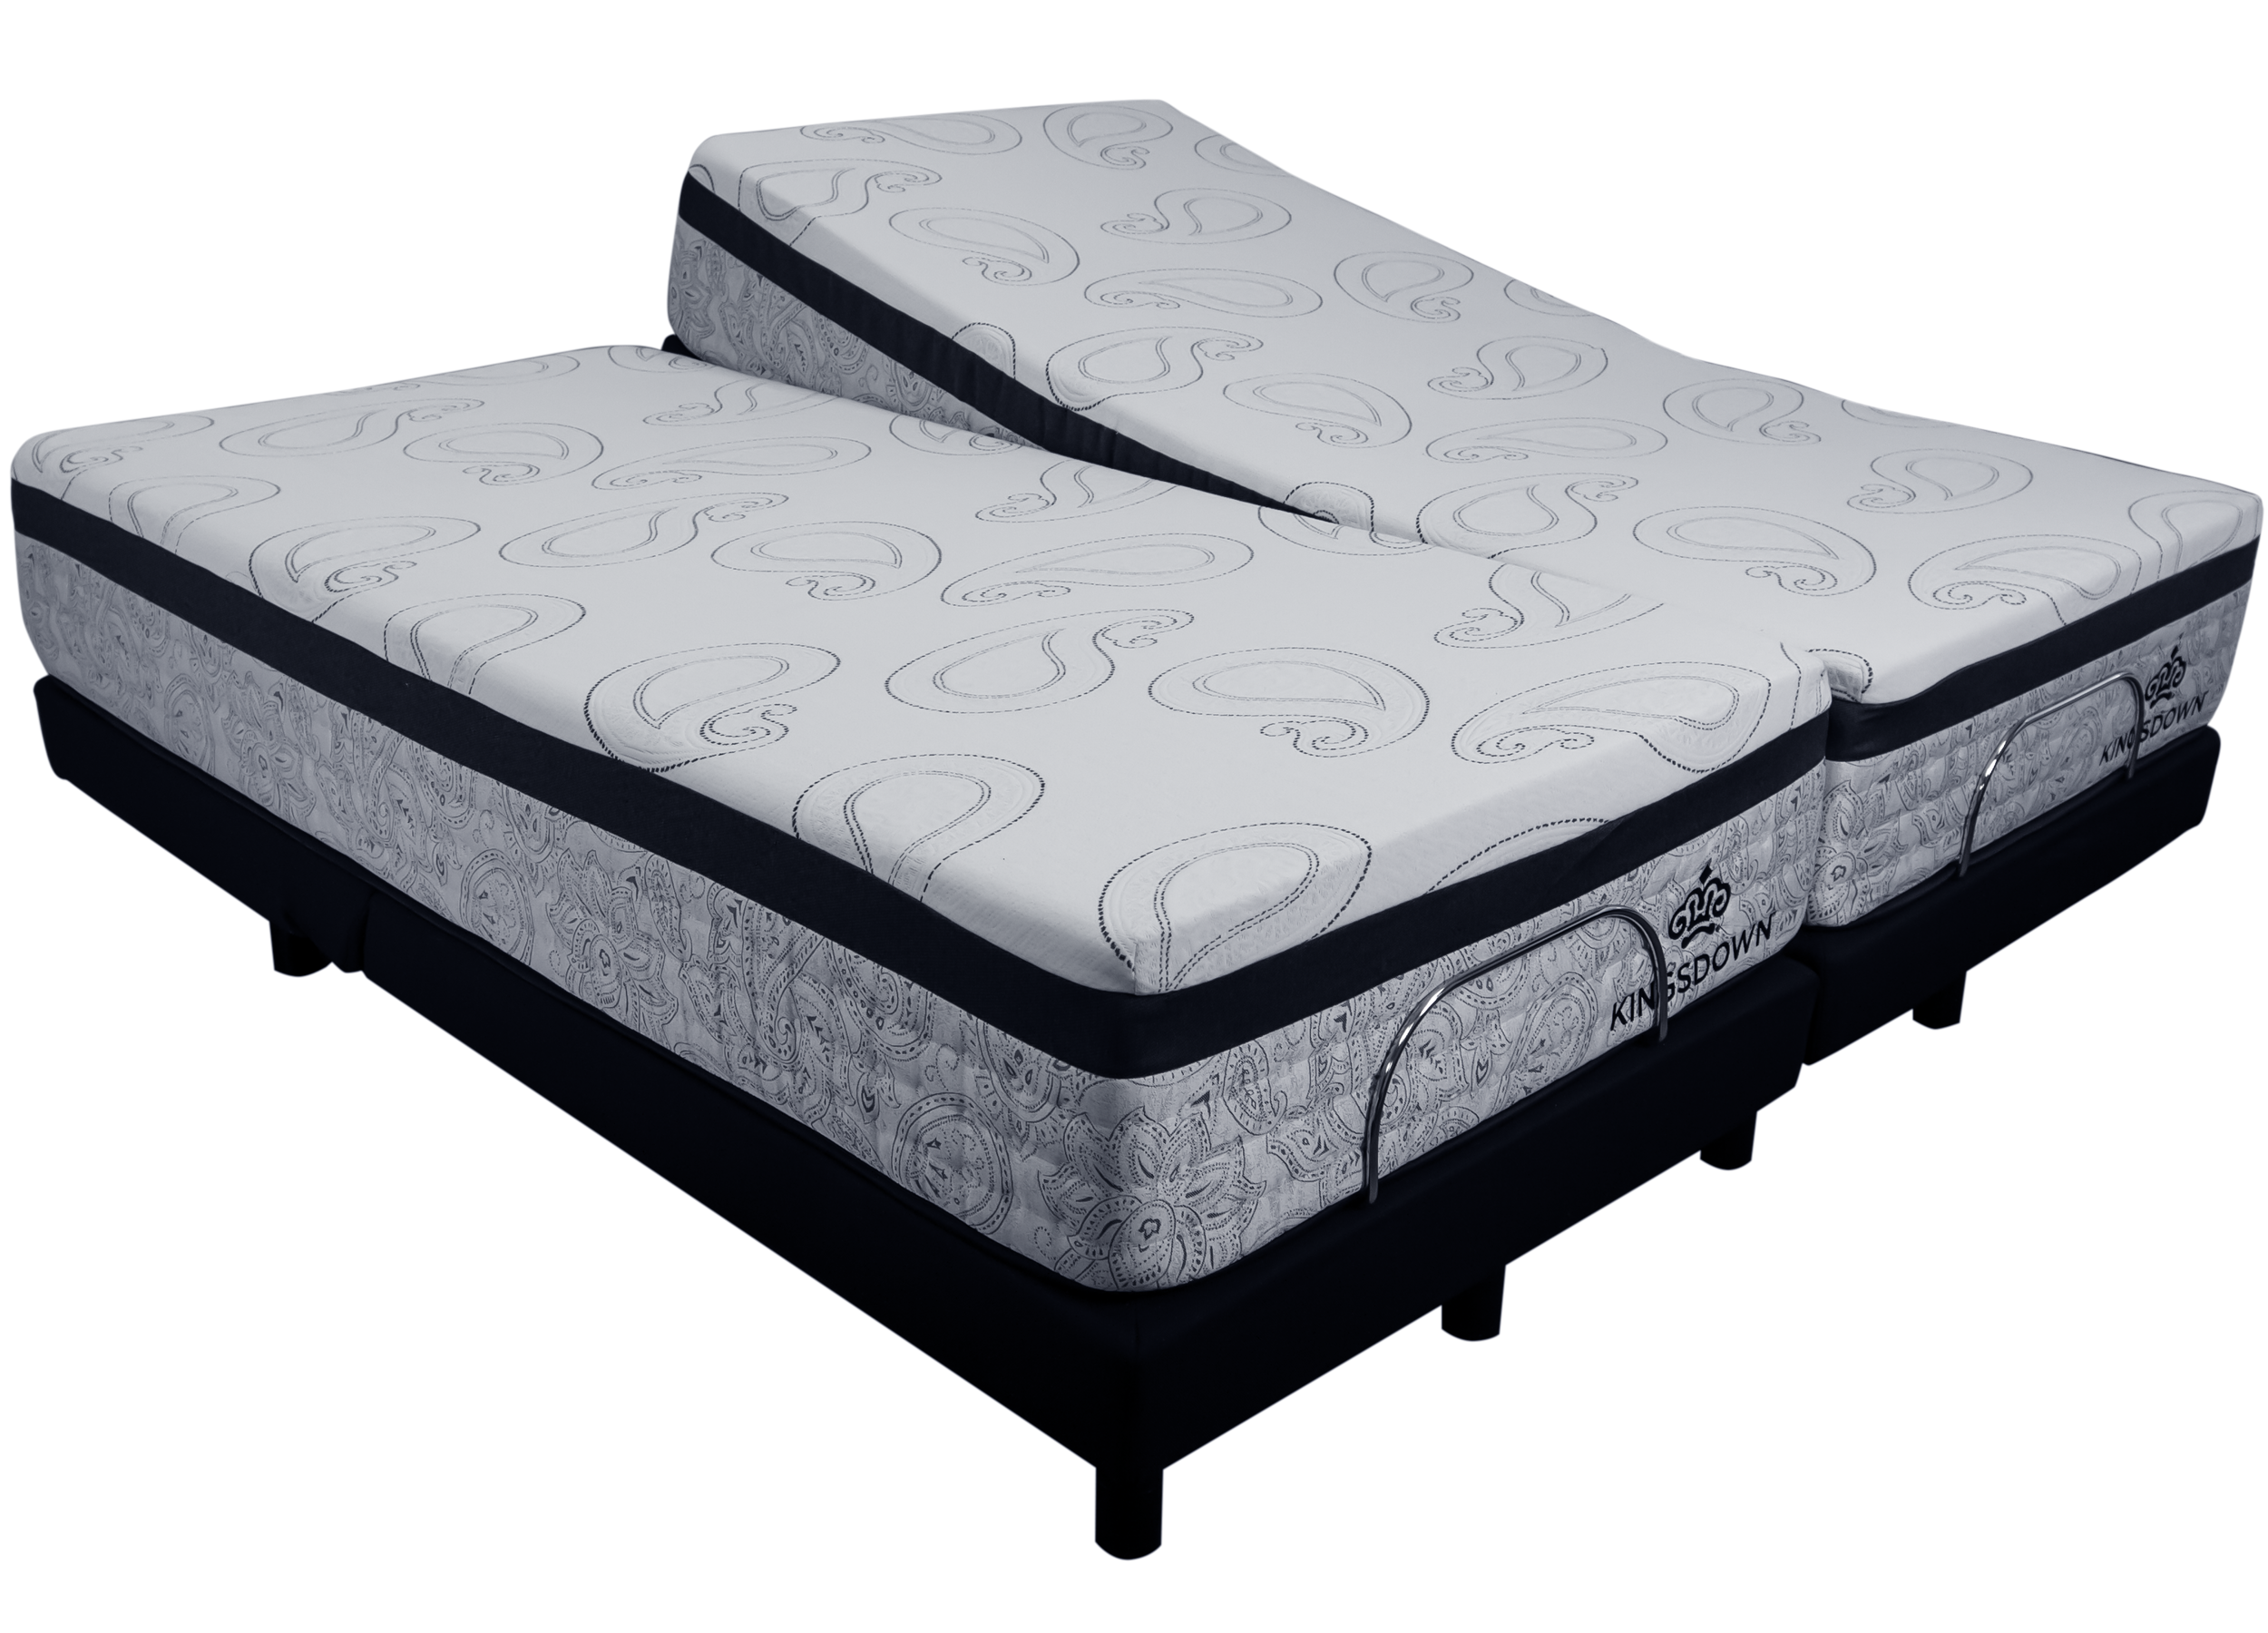 2023 Stock Ensley Royal Split King Adjustable Bed Package